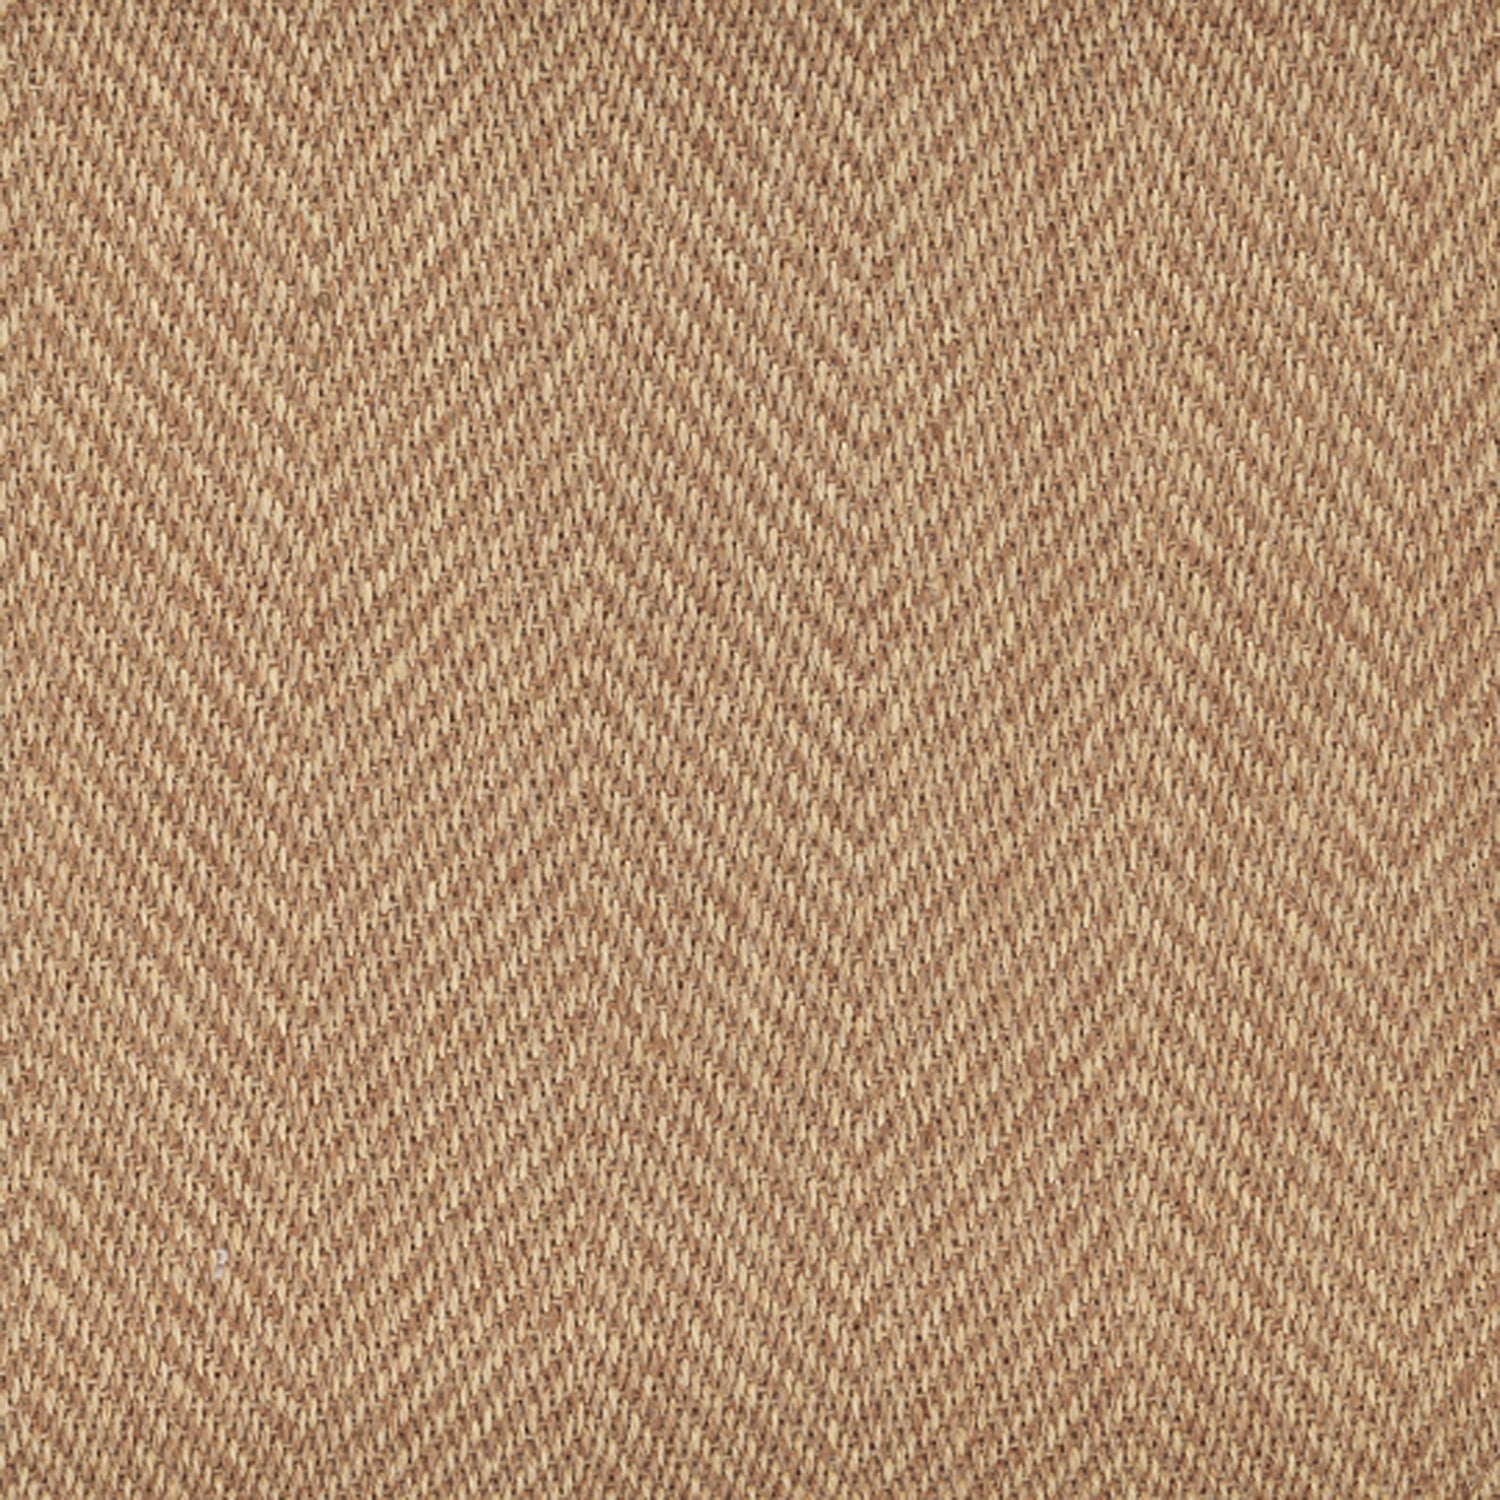 Sisal broadloom carpet swatch in a herringbone weave in bronze and tan.